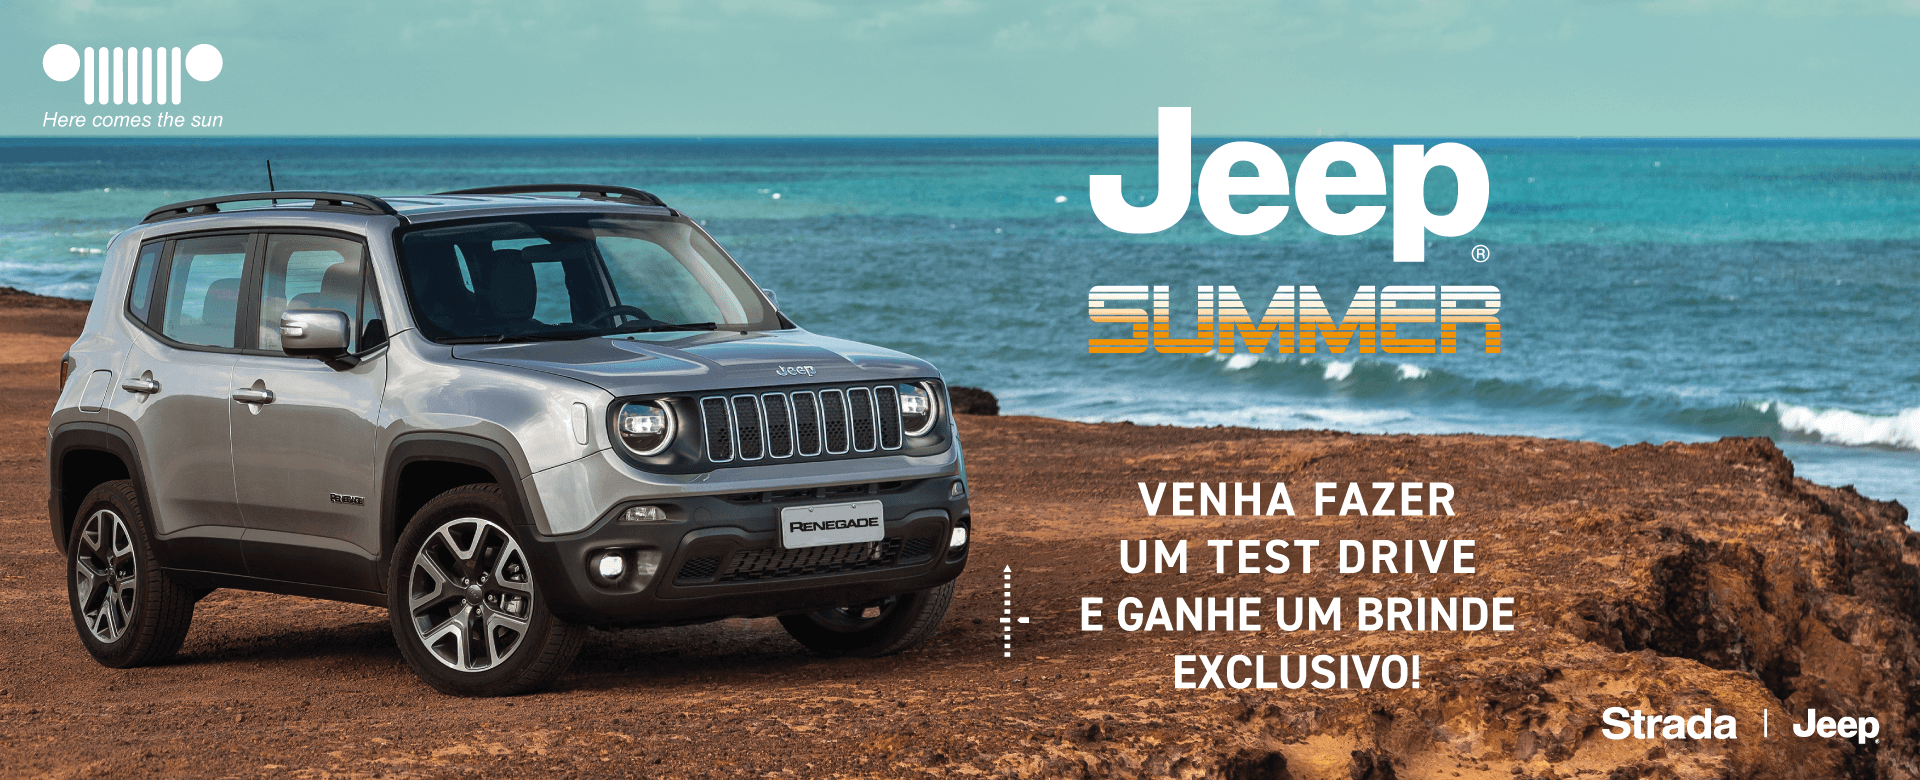 jeep summer